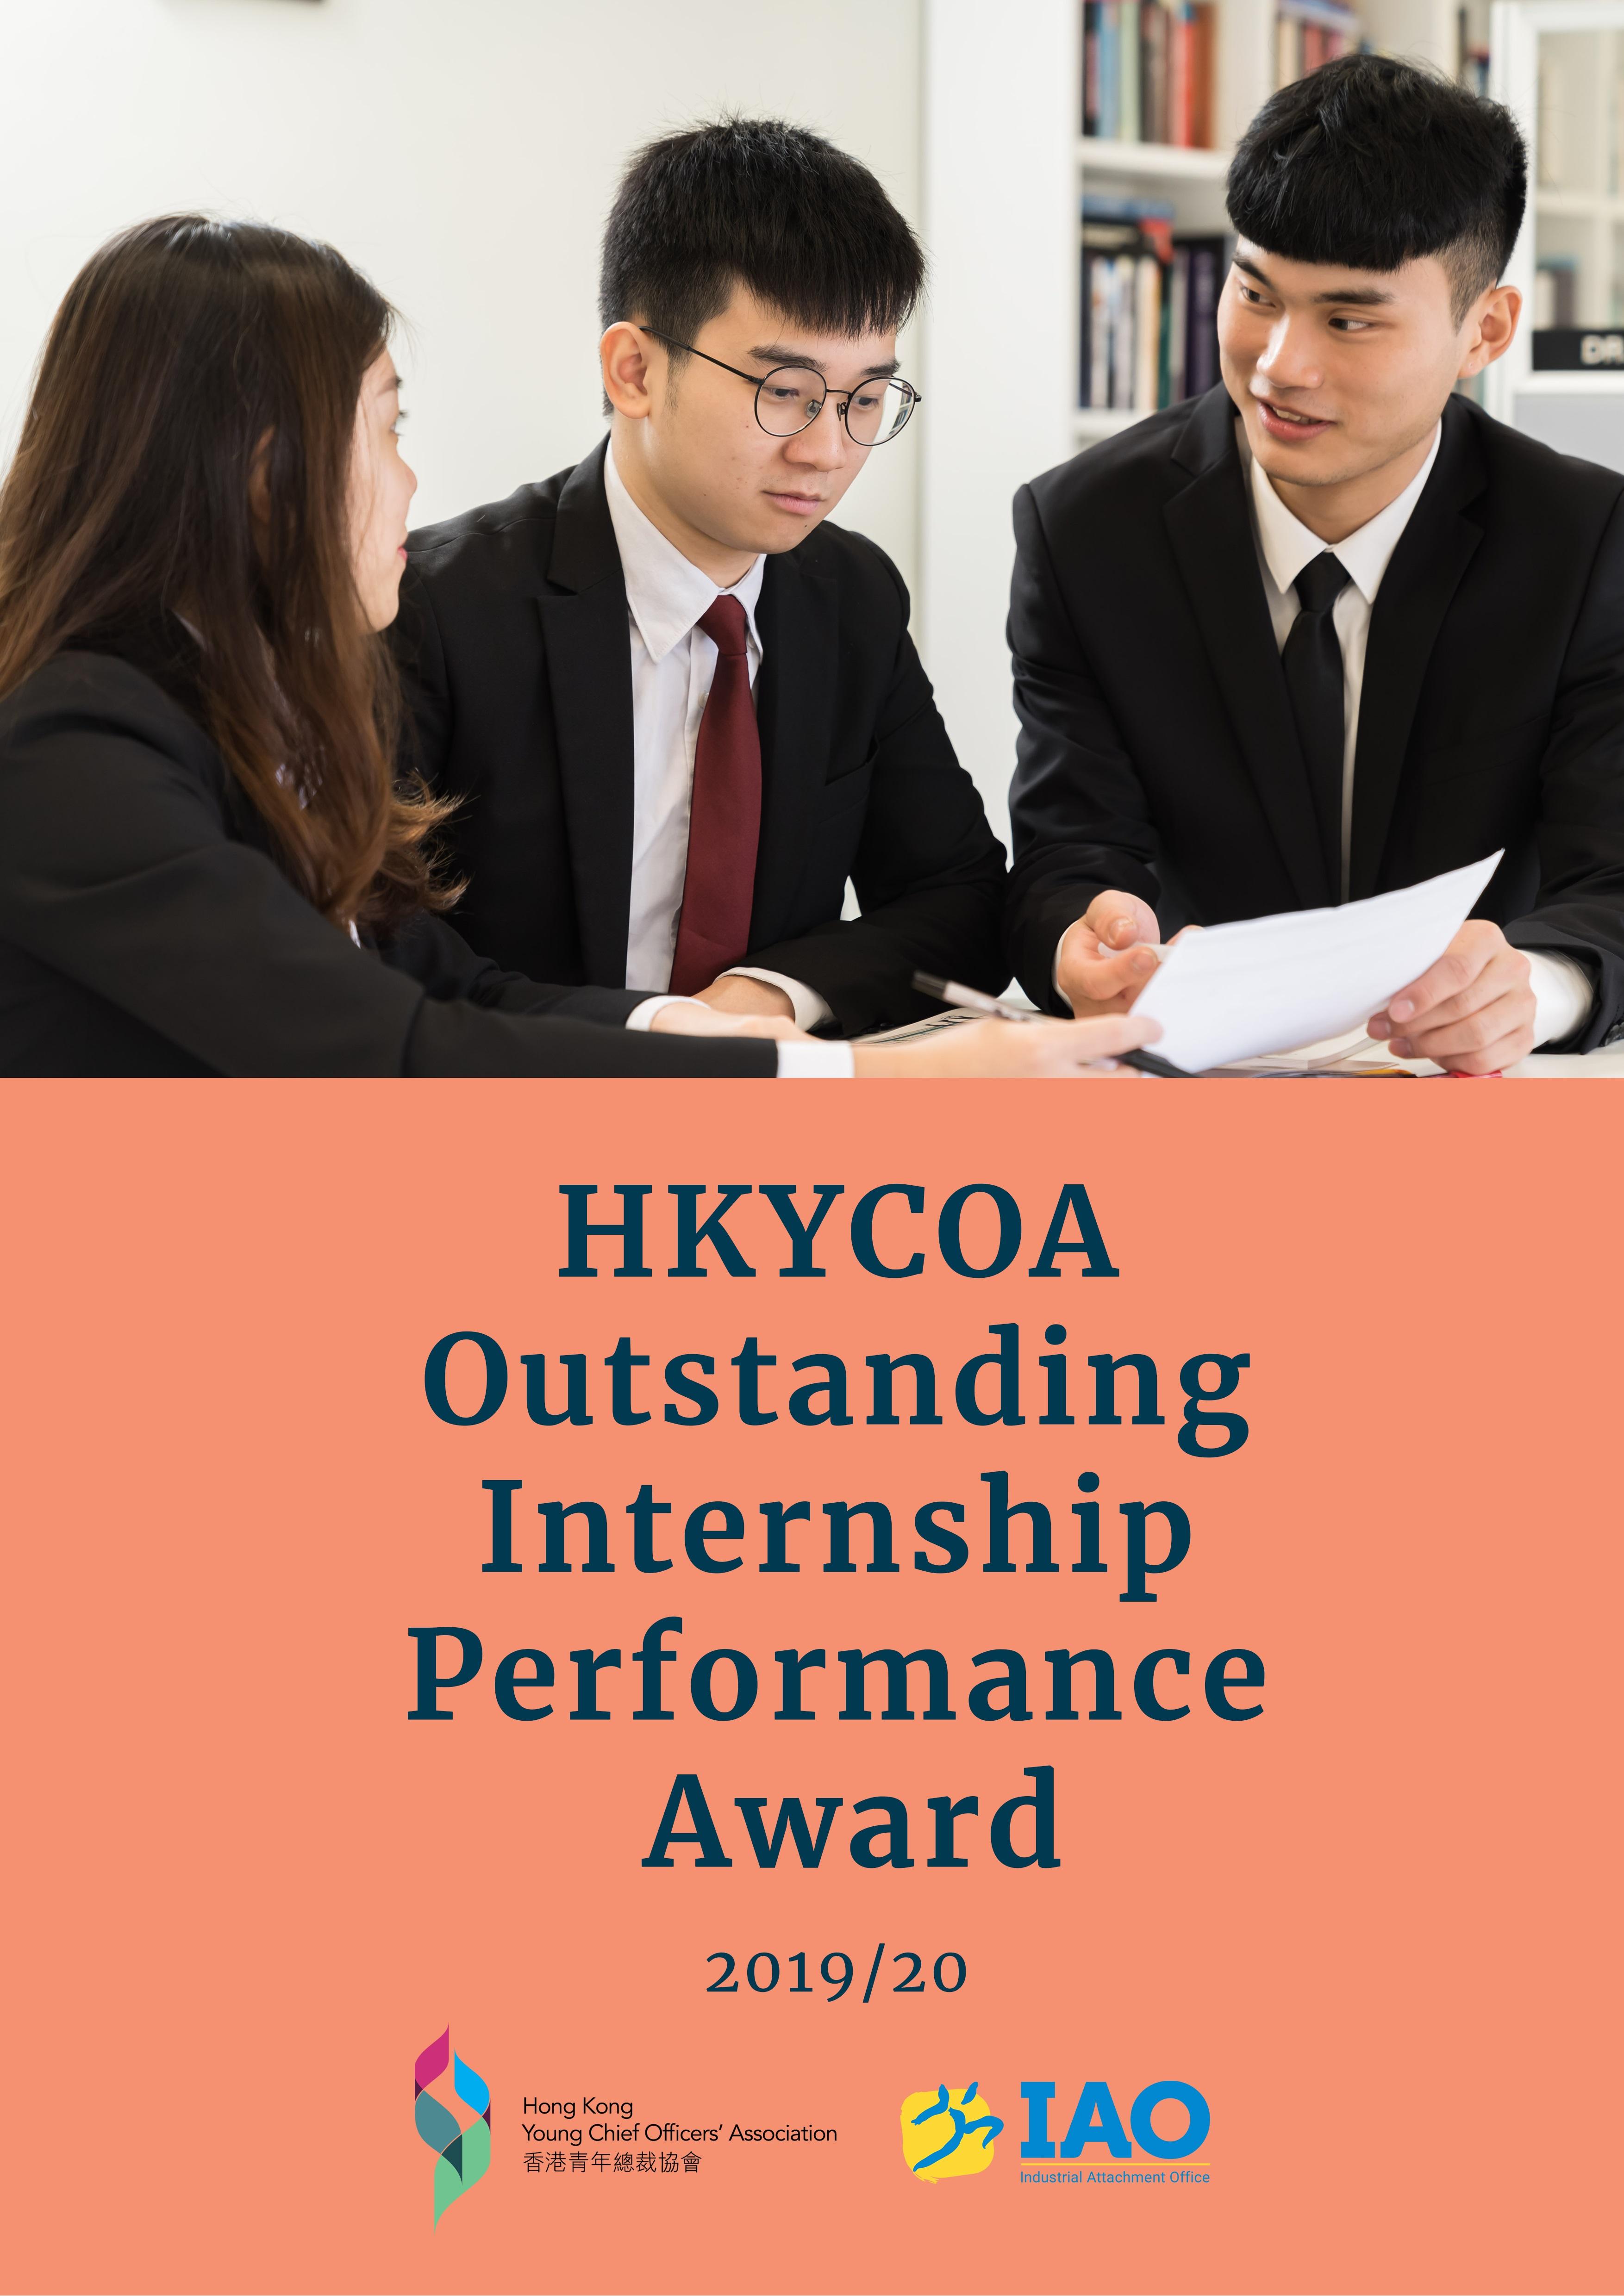 HKYCOA Outstanding Internship Performance Award 2019/20